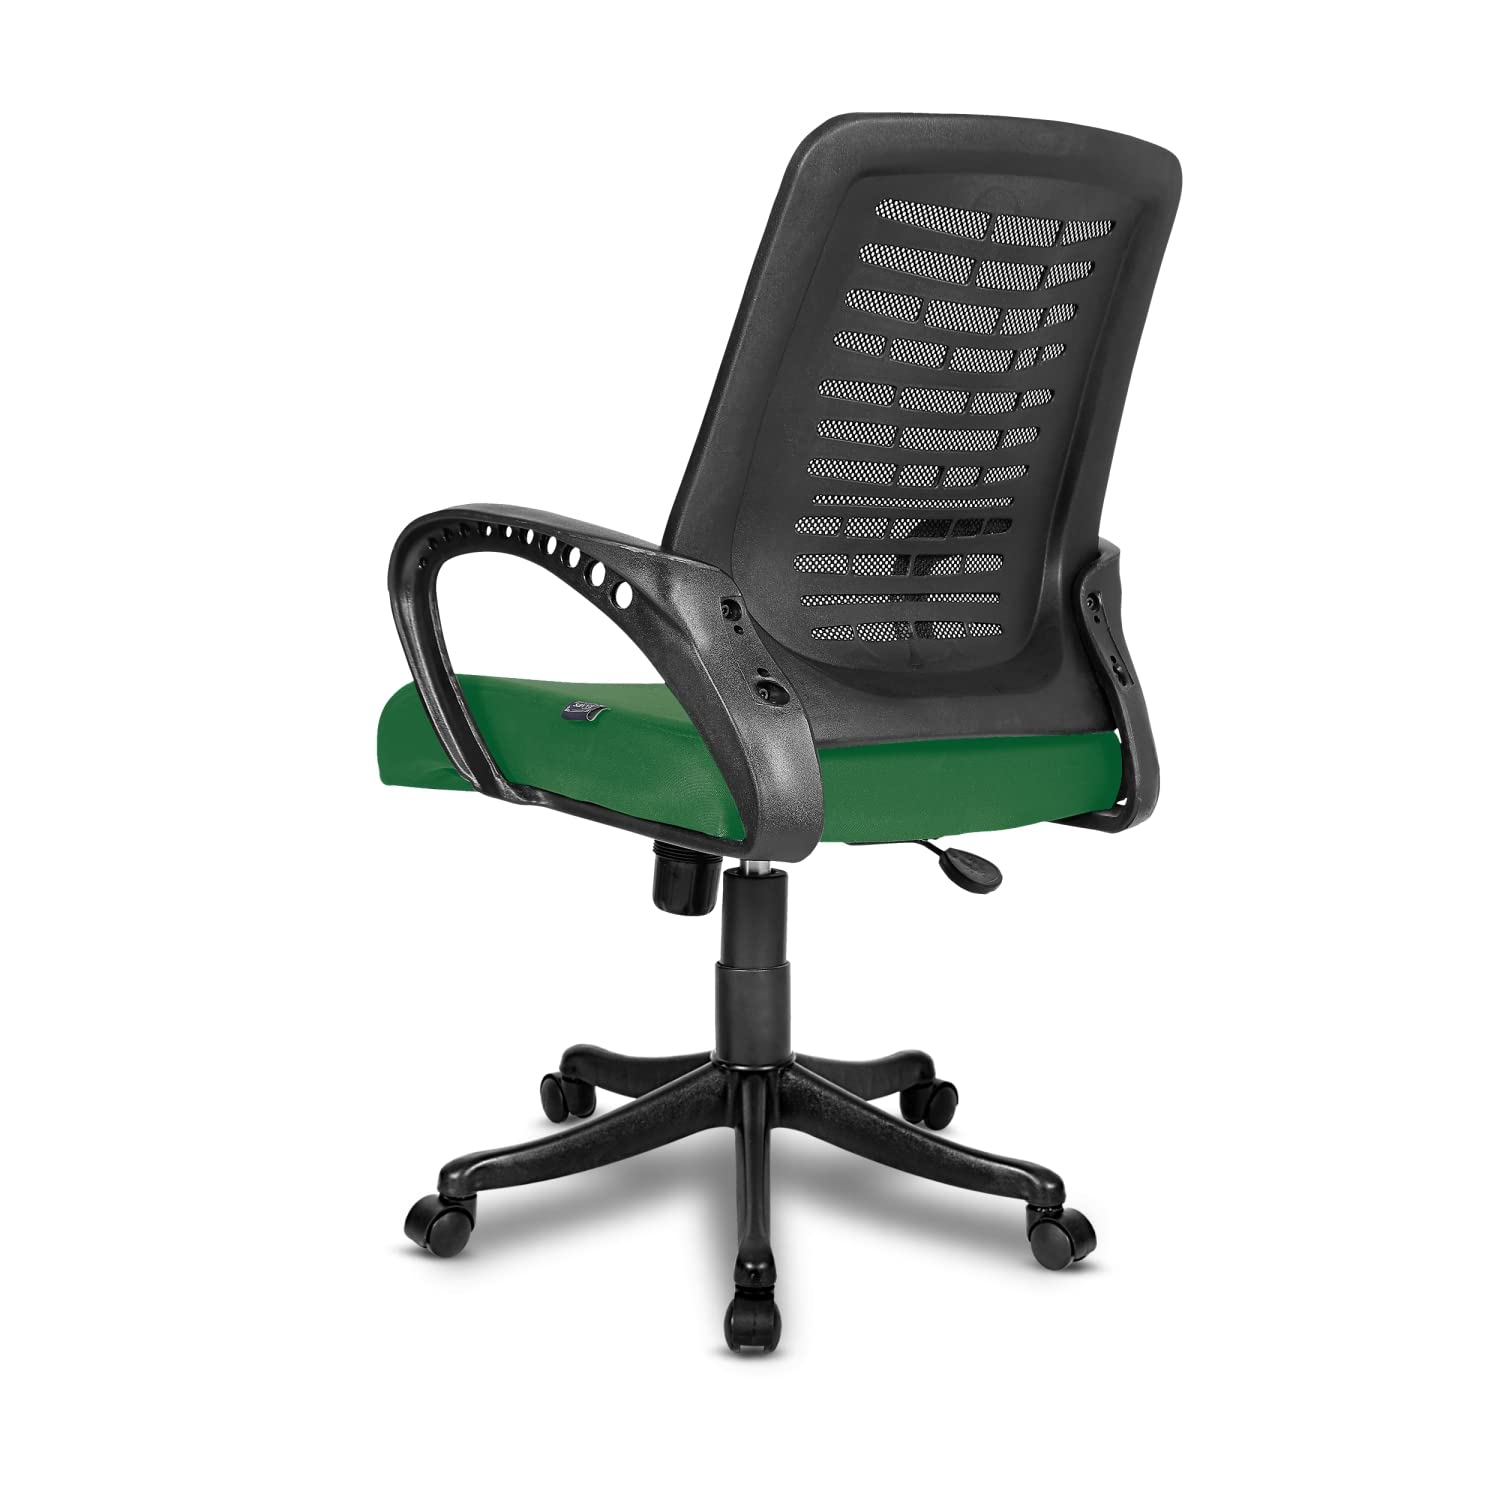 SAVYA HOME Apex Zoom Ergonomic Home and Revolving Office Chair (Green)